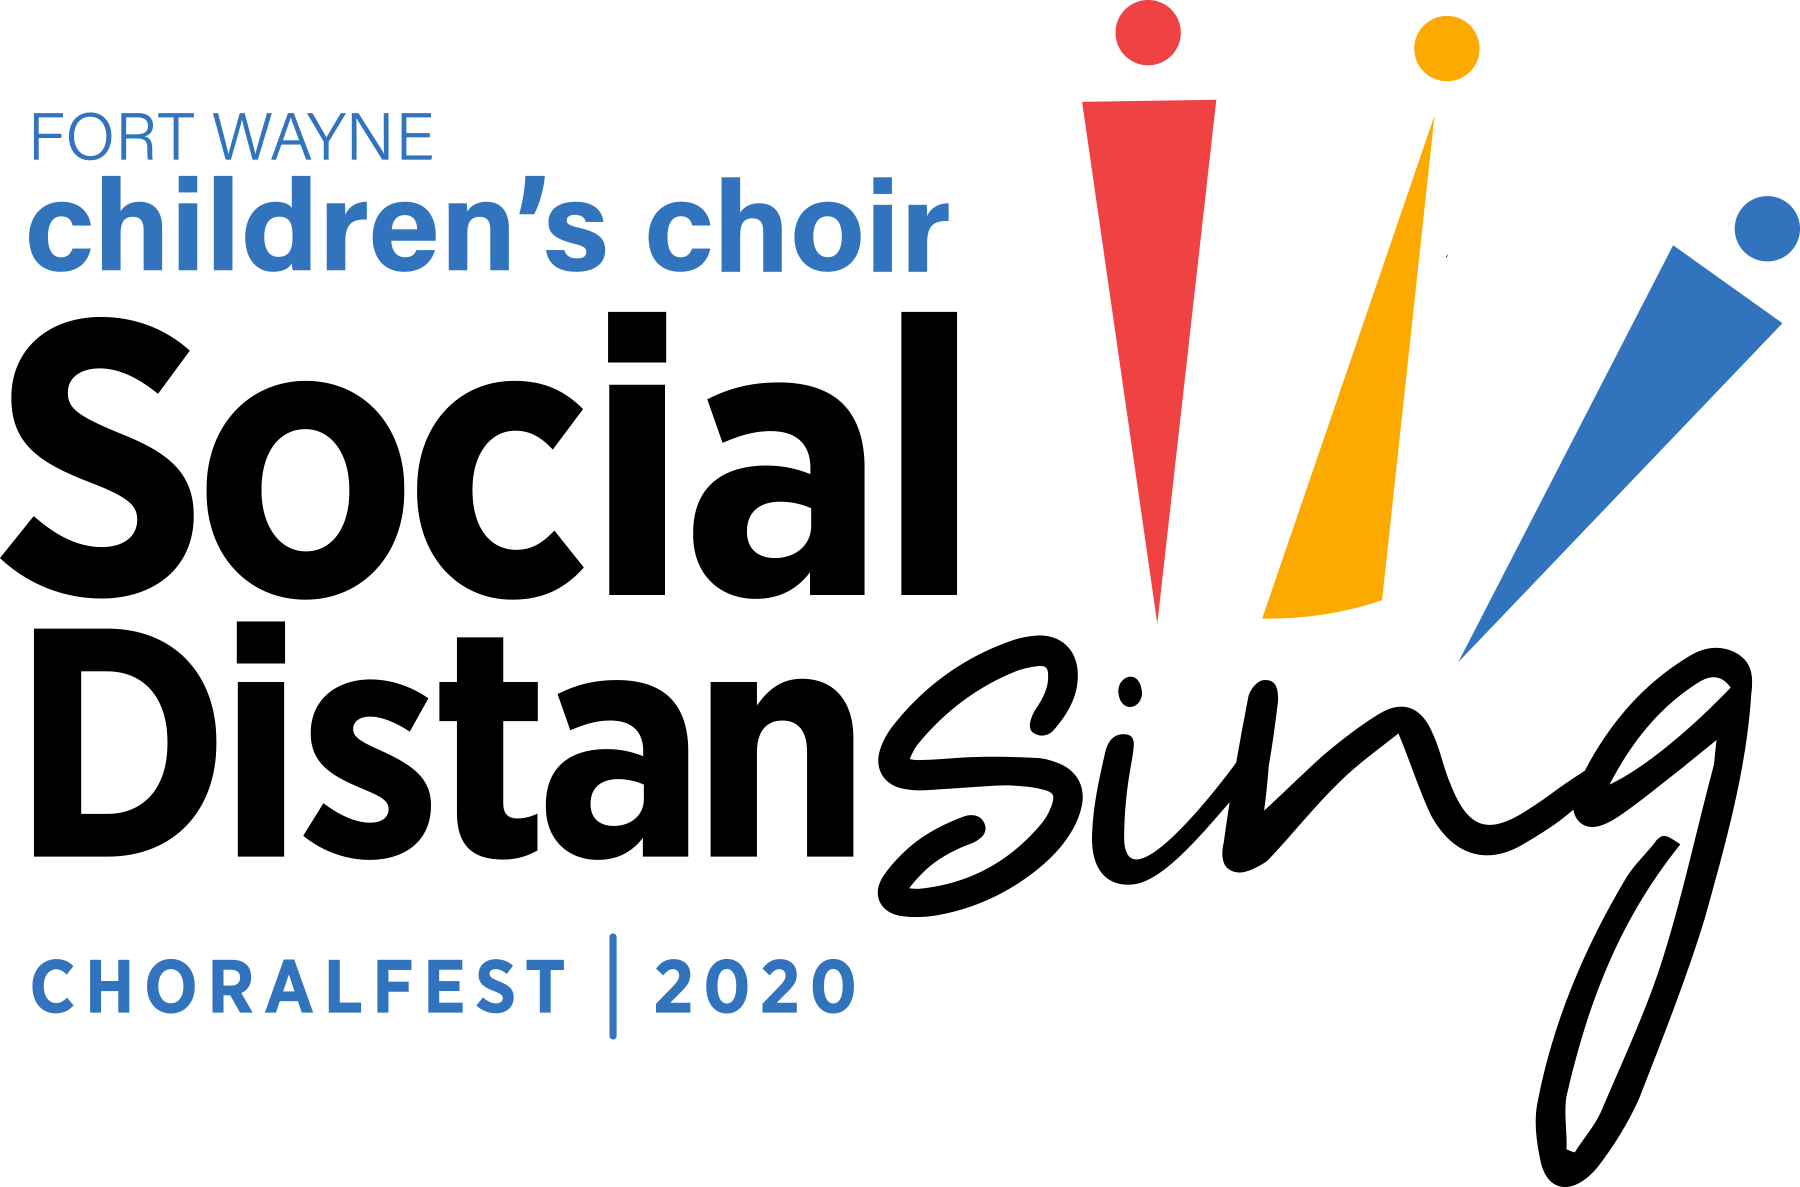 choral festcolor Fort Wayne Children's Choir